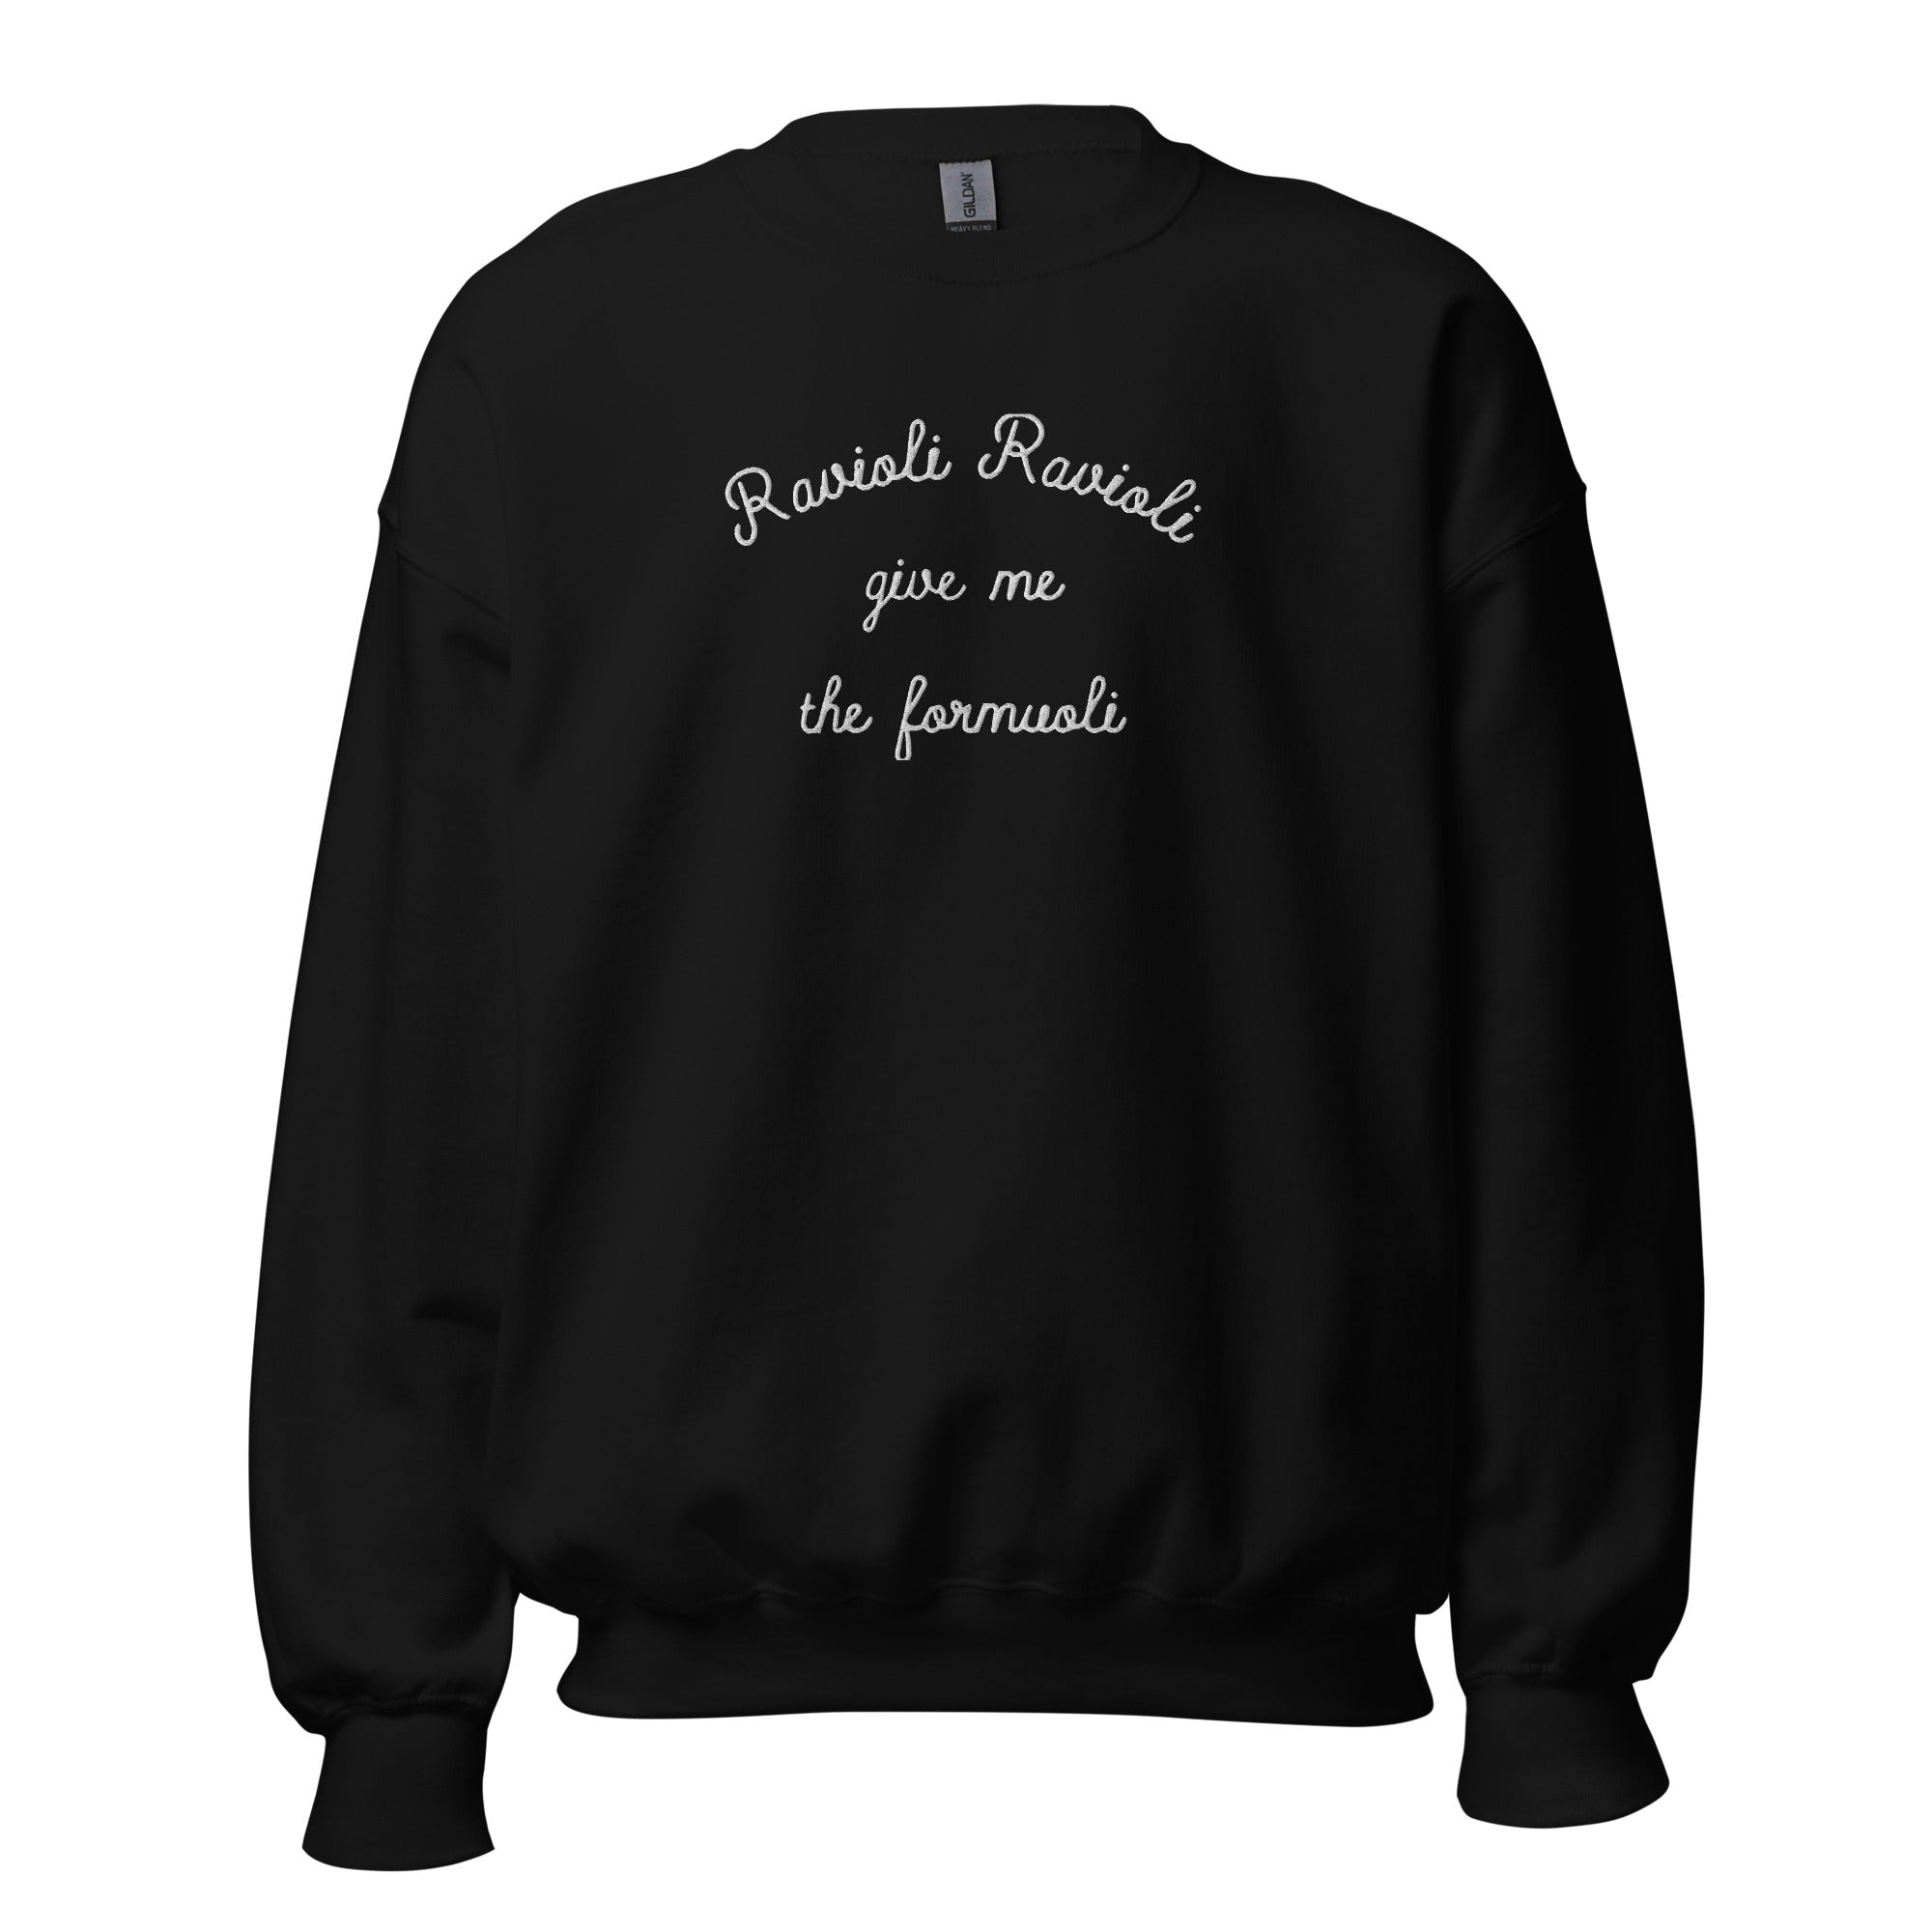 Ravioli Ravioli Give Me The Formuoli Embroidered Unisex Sweatshirt